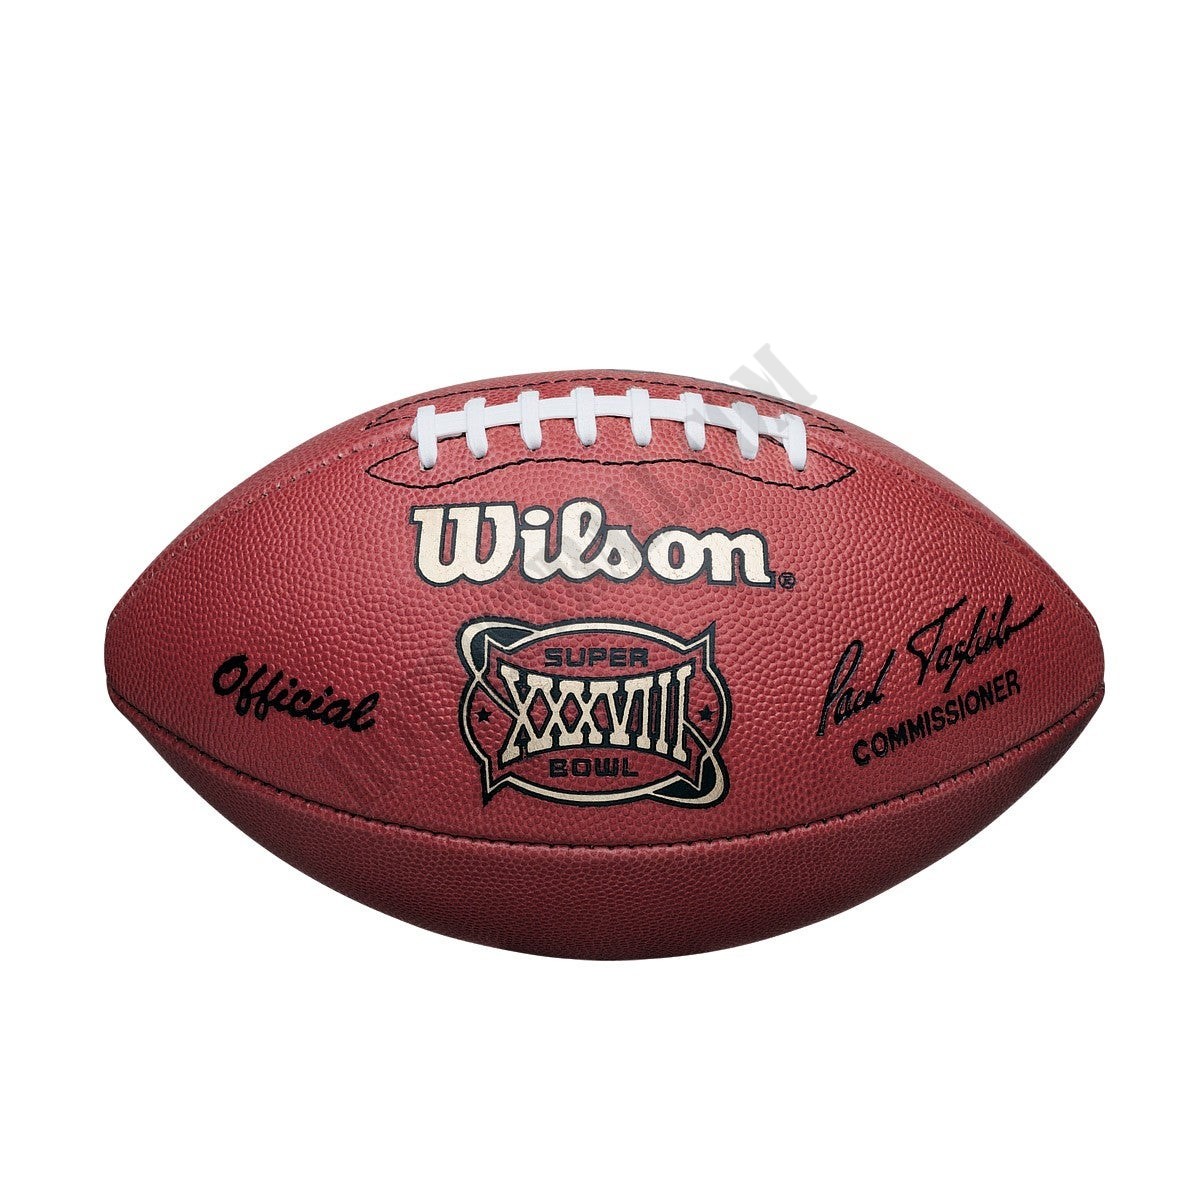 Super Bowl XXXVIII Game Football - New England Patriots ● Wilson Promotions - Super Bowl XXXVIII Game Football - New England Patriots ● Wilson Promotions